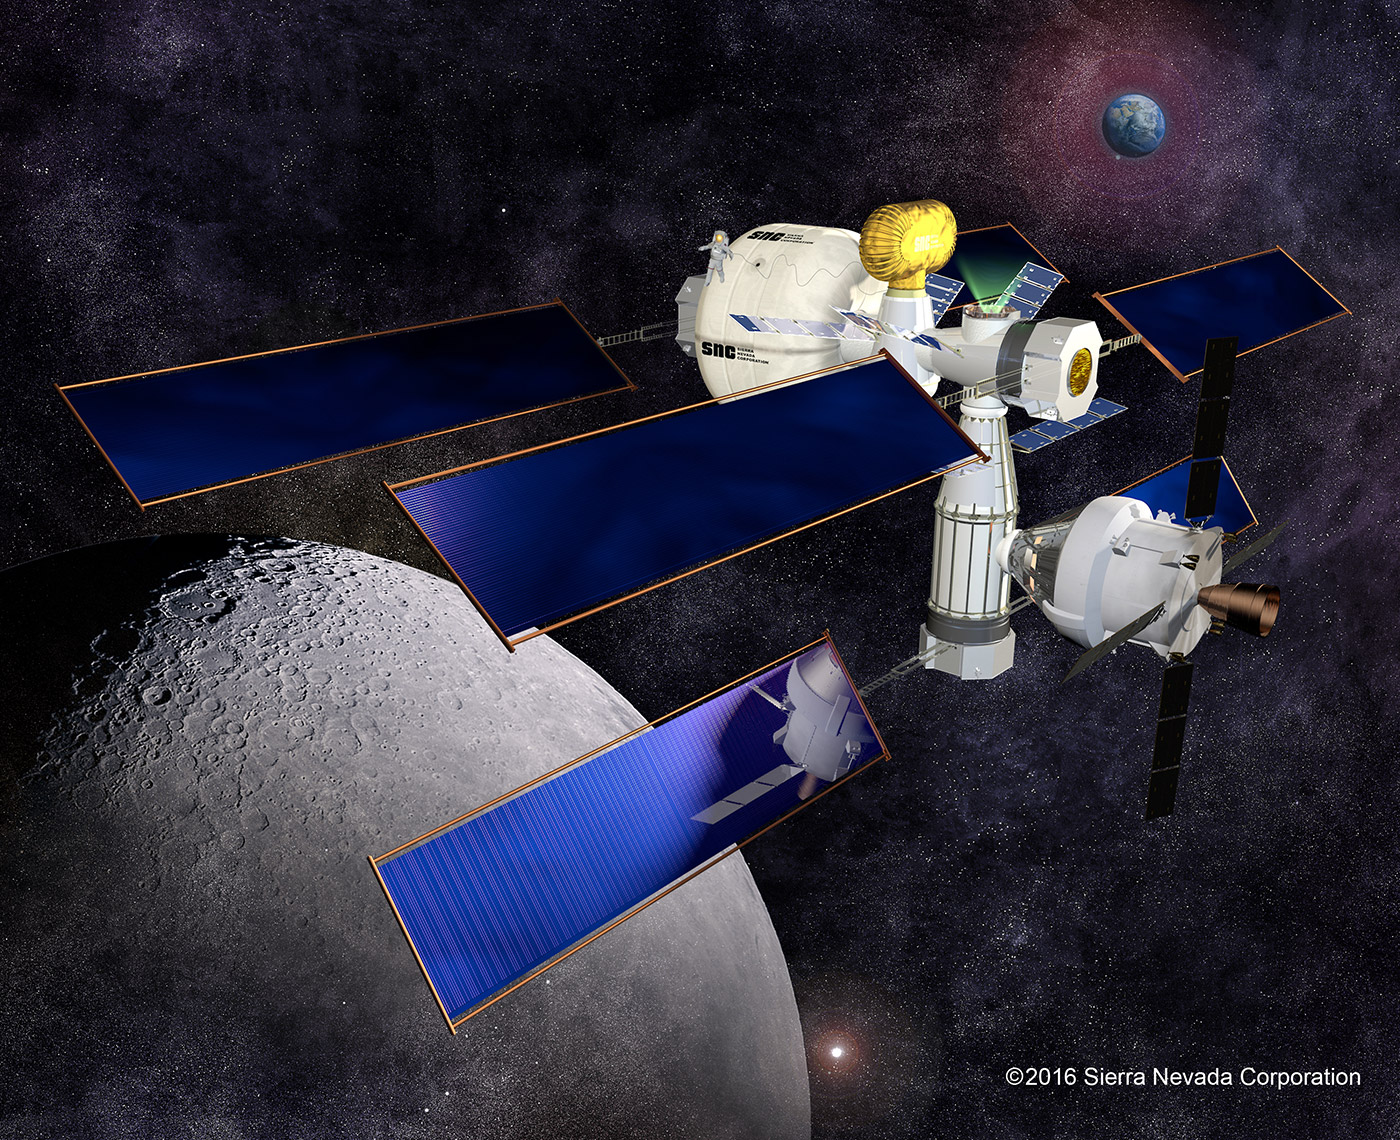 NASA will build full-scale deep space habitats on Earth